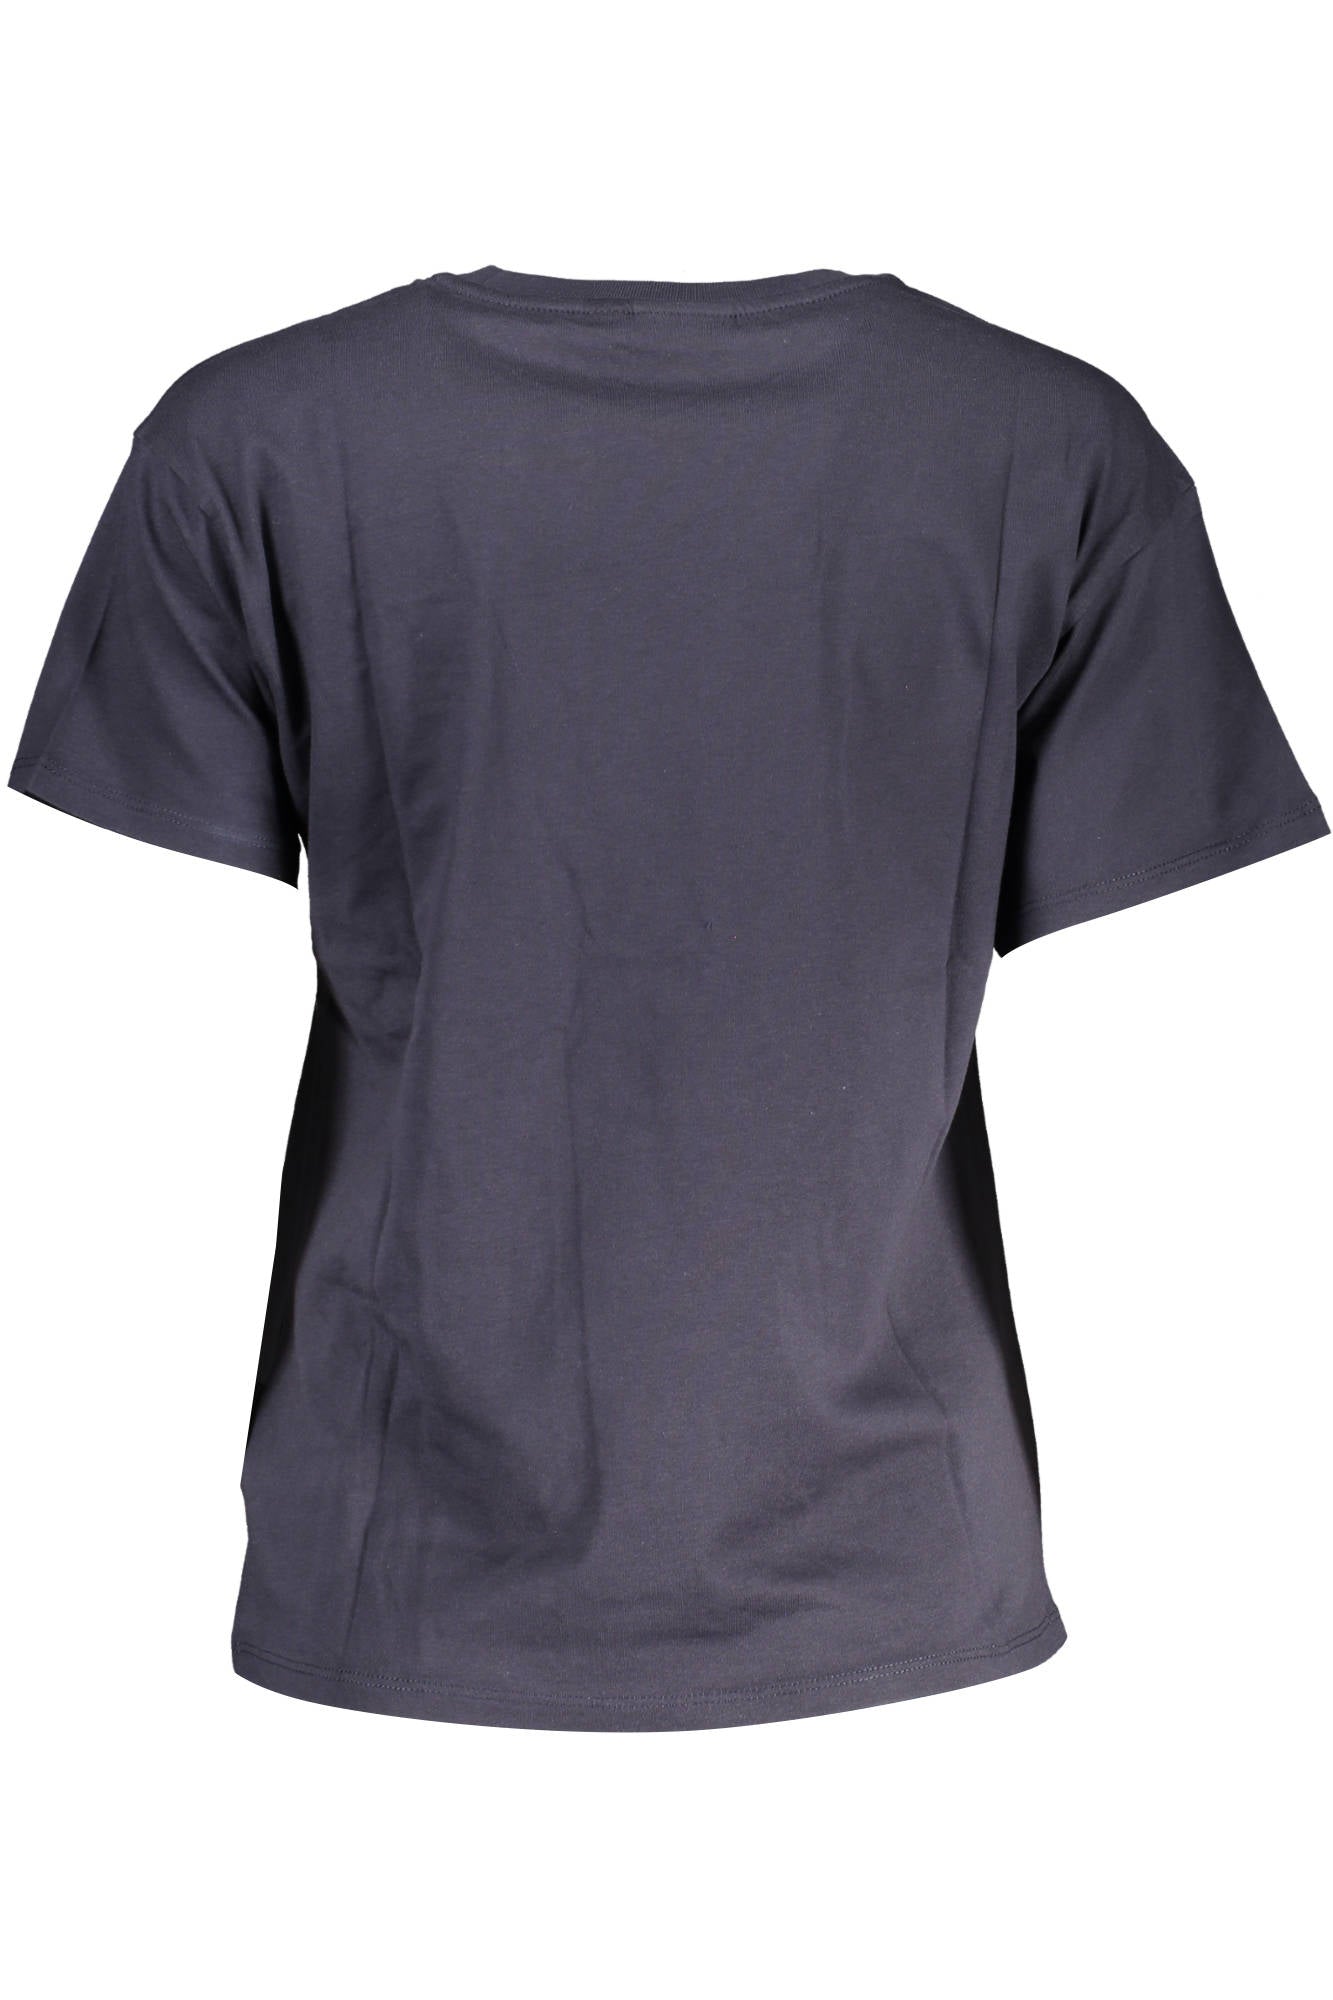 Napapijri Blue Cotton Tops & T-Shirt - Fizigo